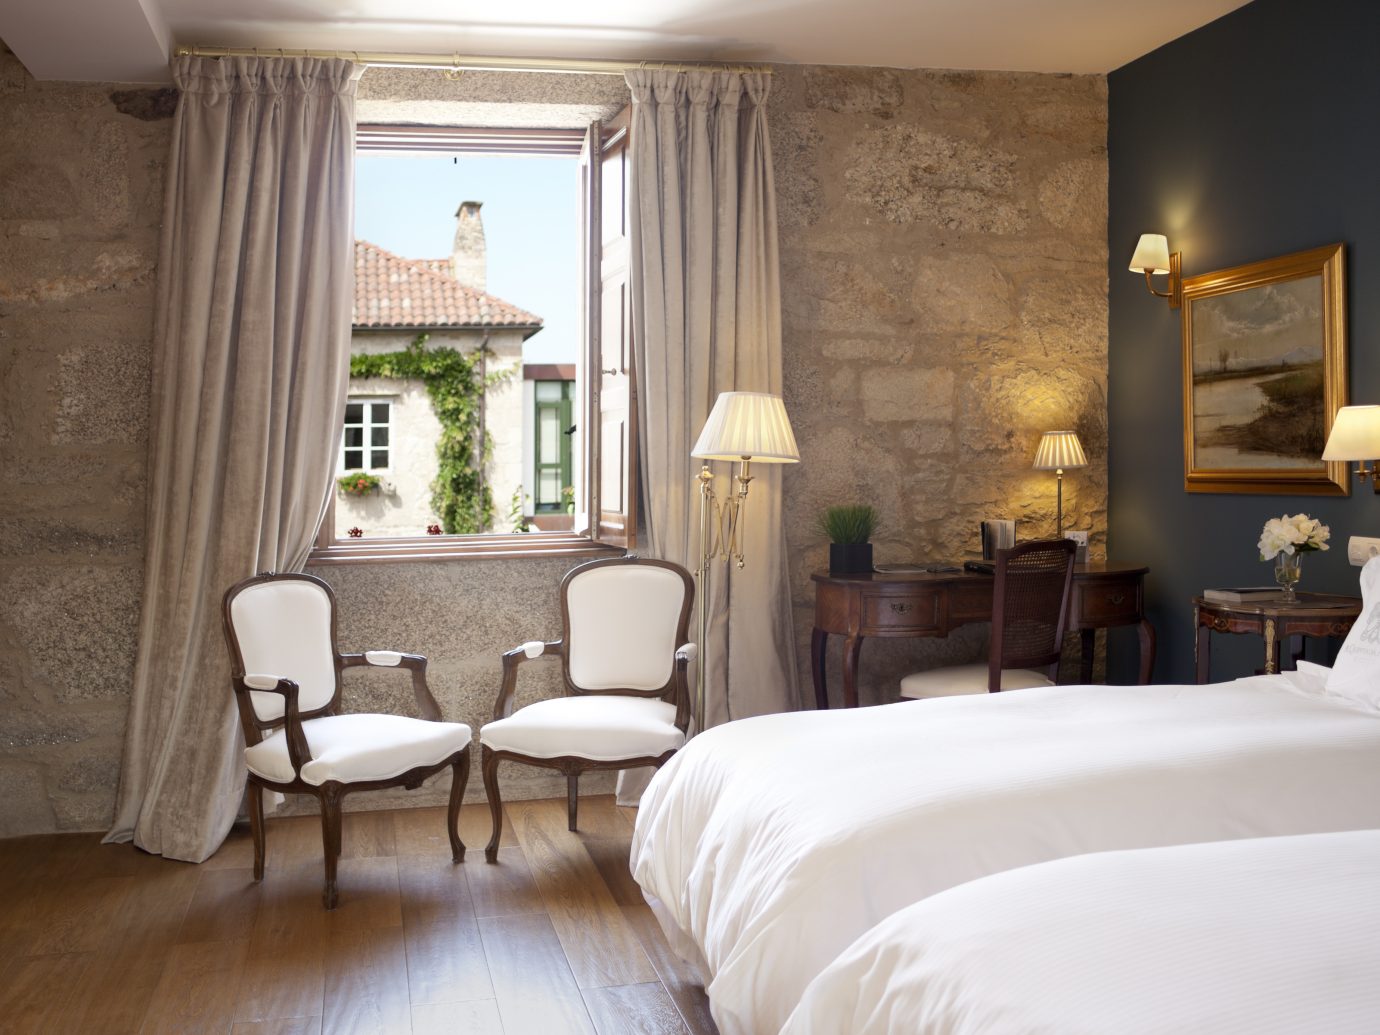 Guestroom at the Hotel Spa Relais & Chateaux A Quinta da Auga, Santiago de Compostela, Spain